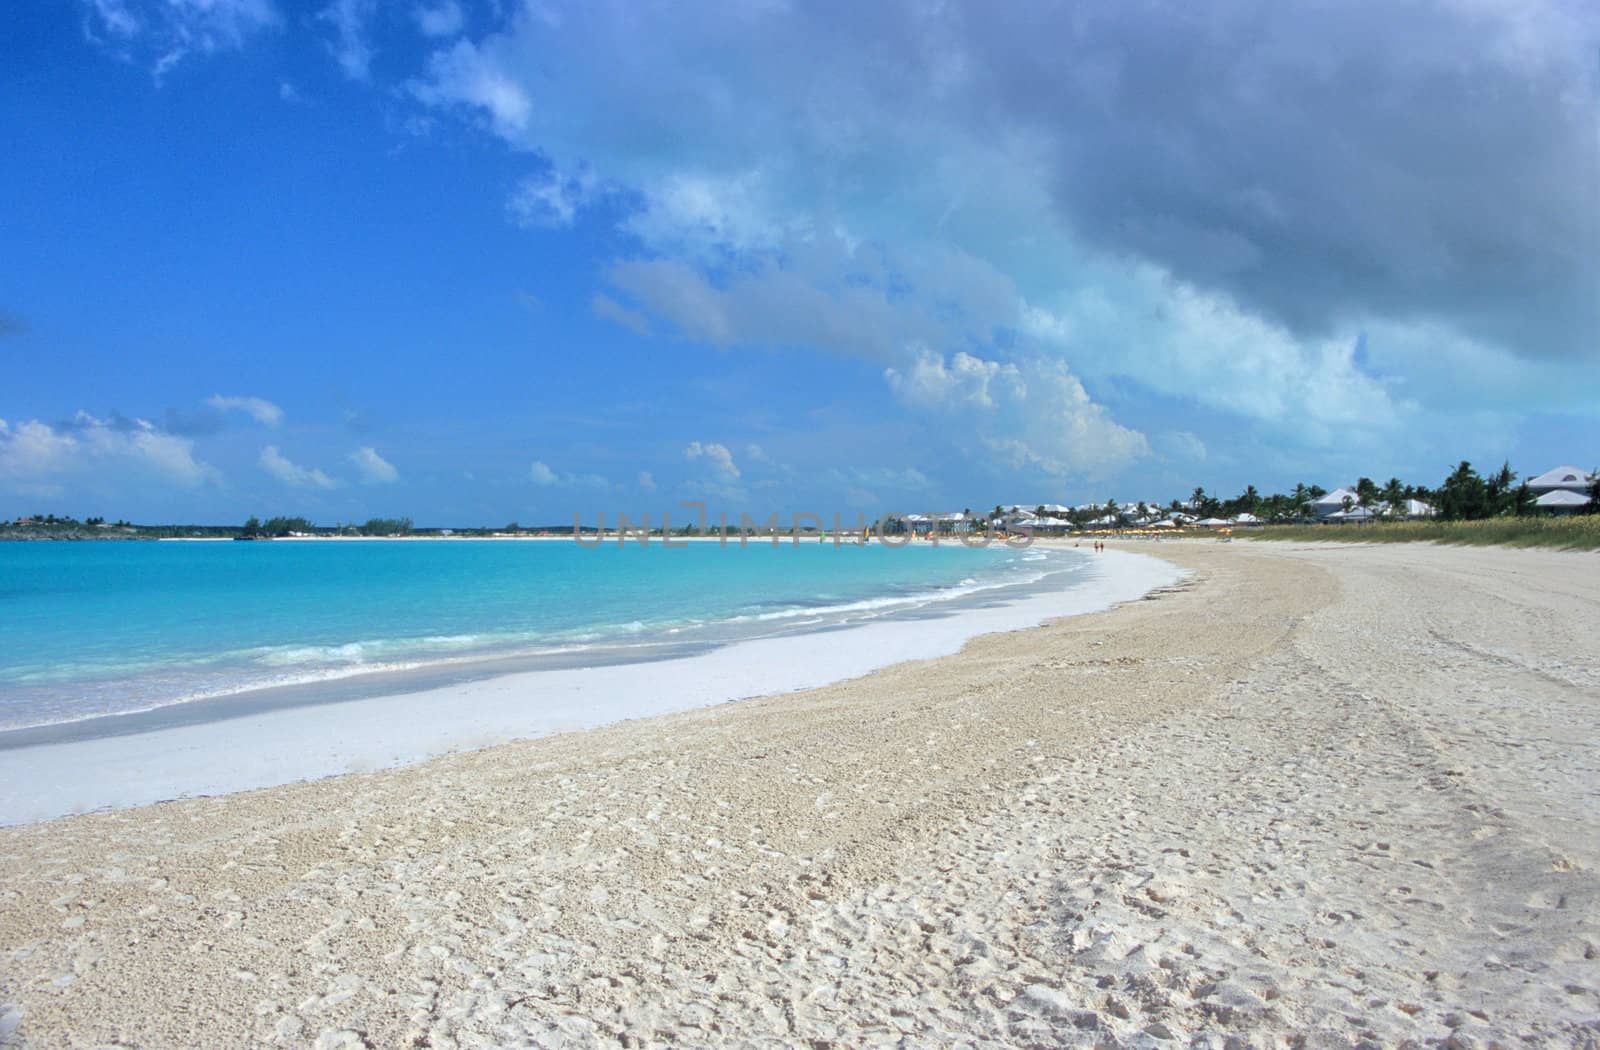 The pristine white sandy beach of a Bahamas resort area.